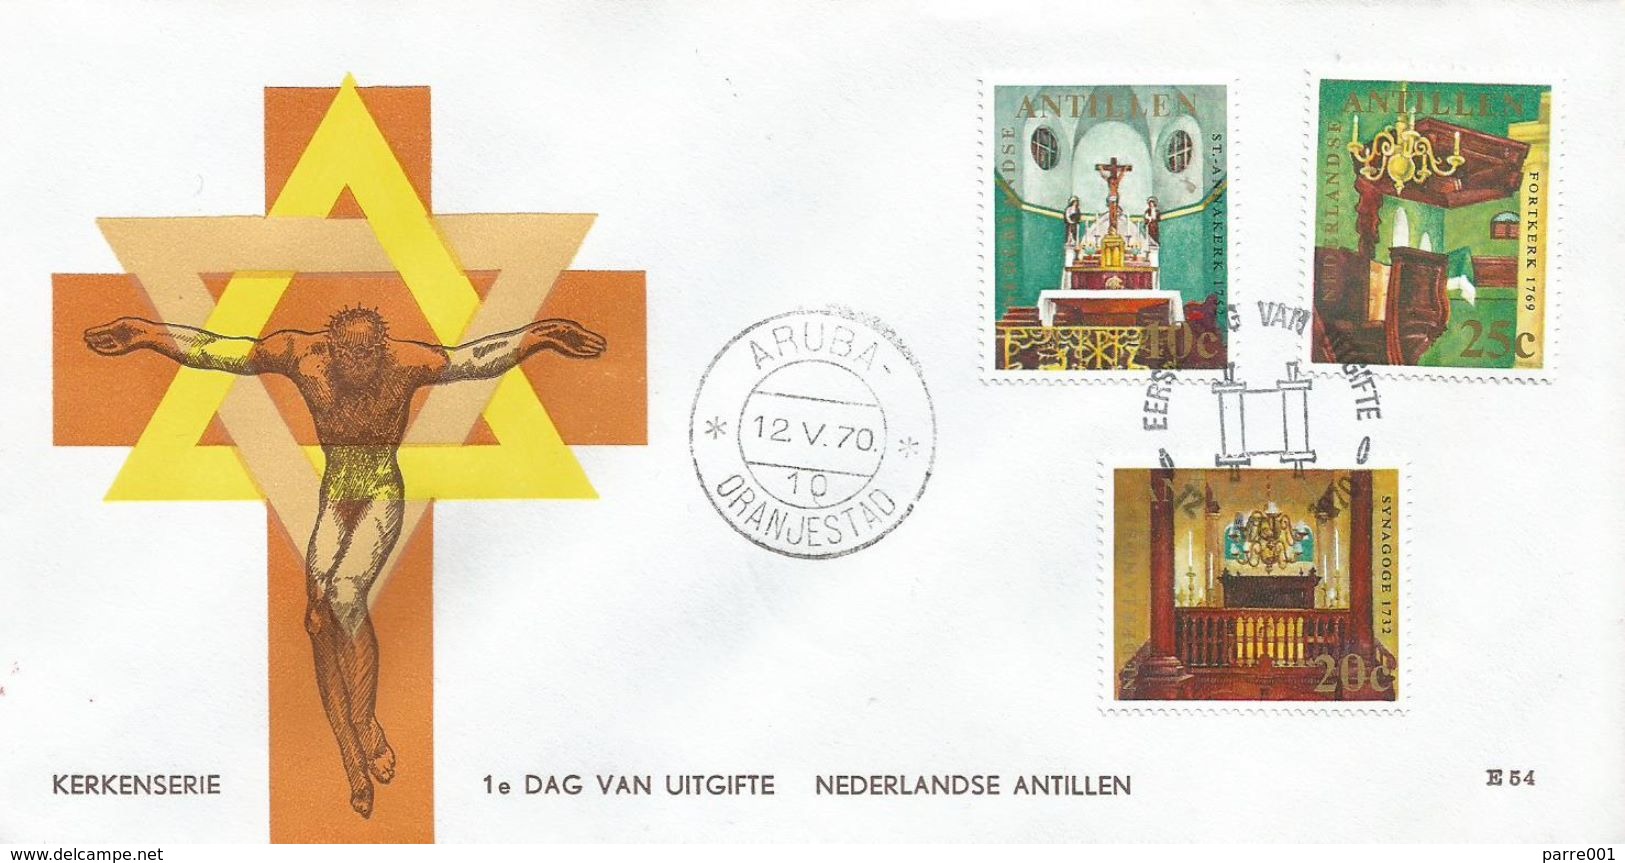 Netherlands Antilles 1970 Aruba Curaçao Interior Emanuel-Synagoge Punda Anna Church Obrabanda FDC Cover - Joodse Geloof